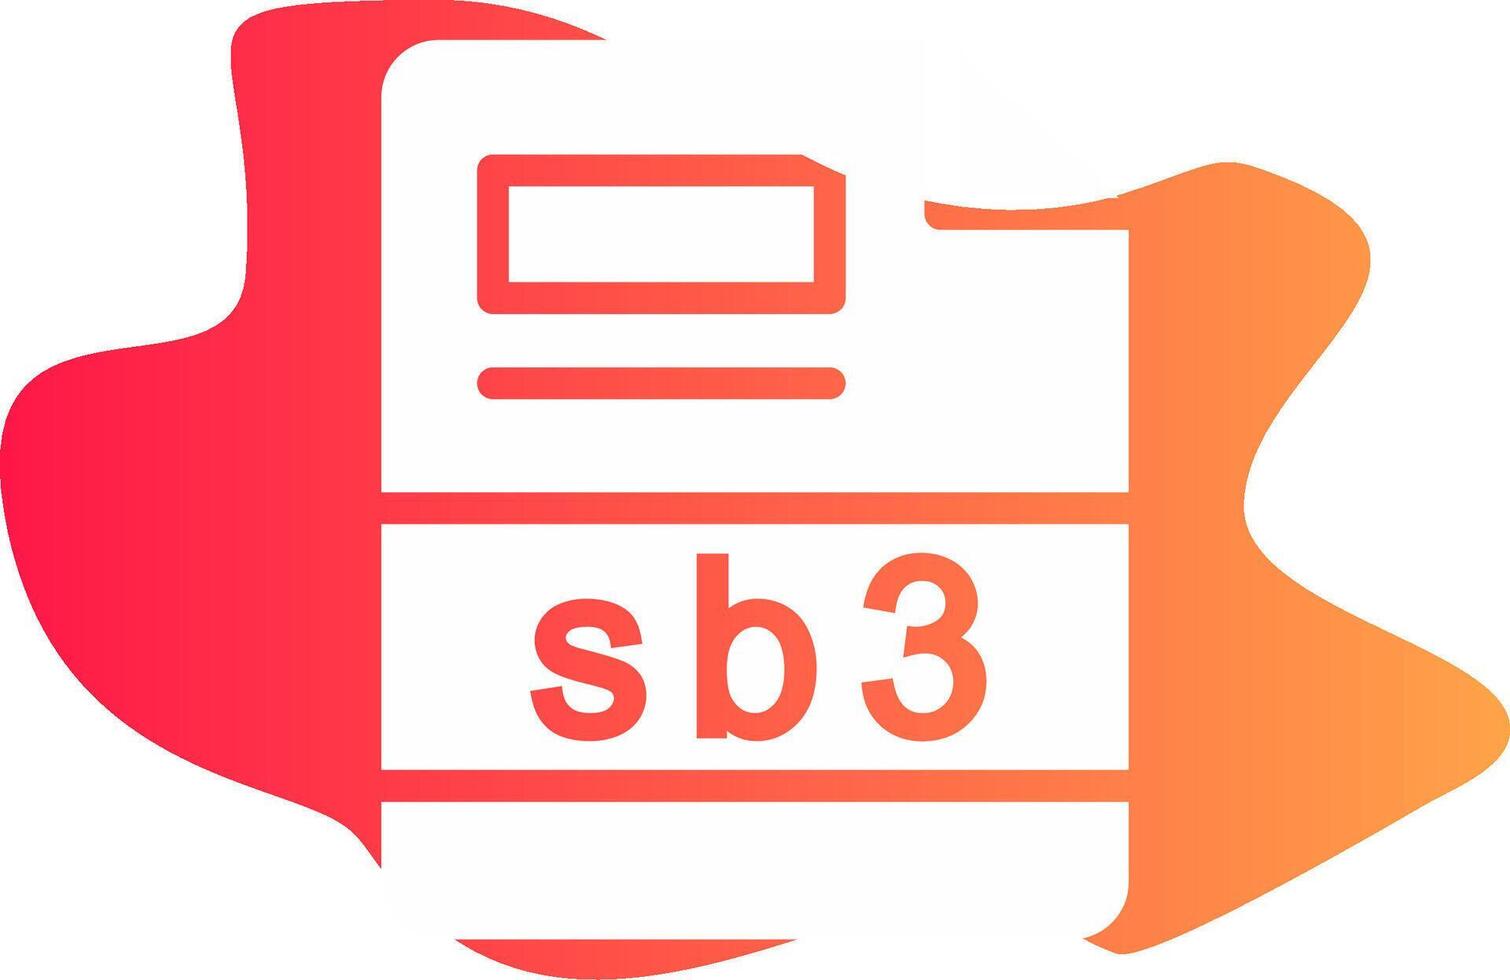 sb3 Creative Icon Design vector